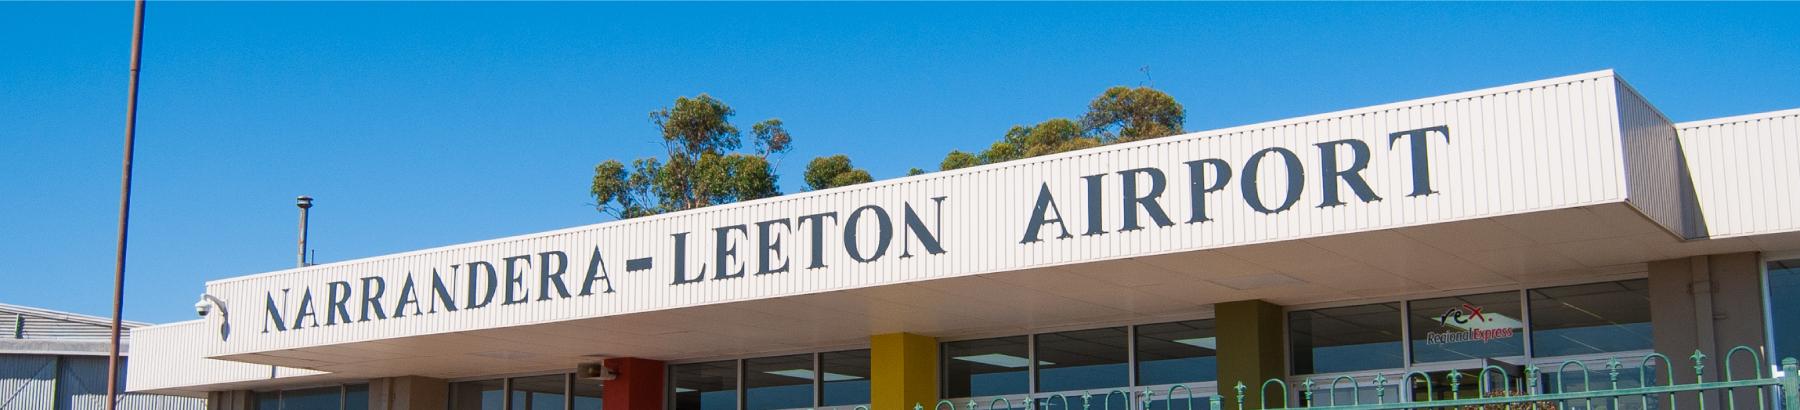 Narrandera Leeton Airport